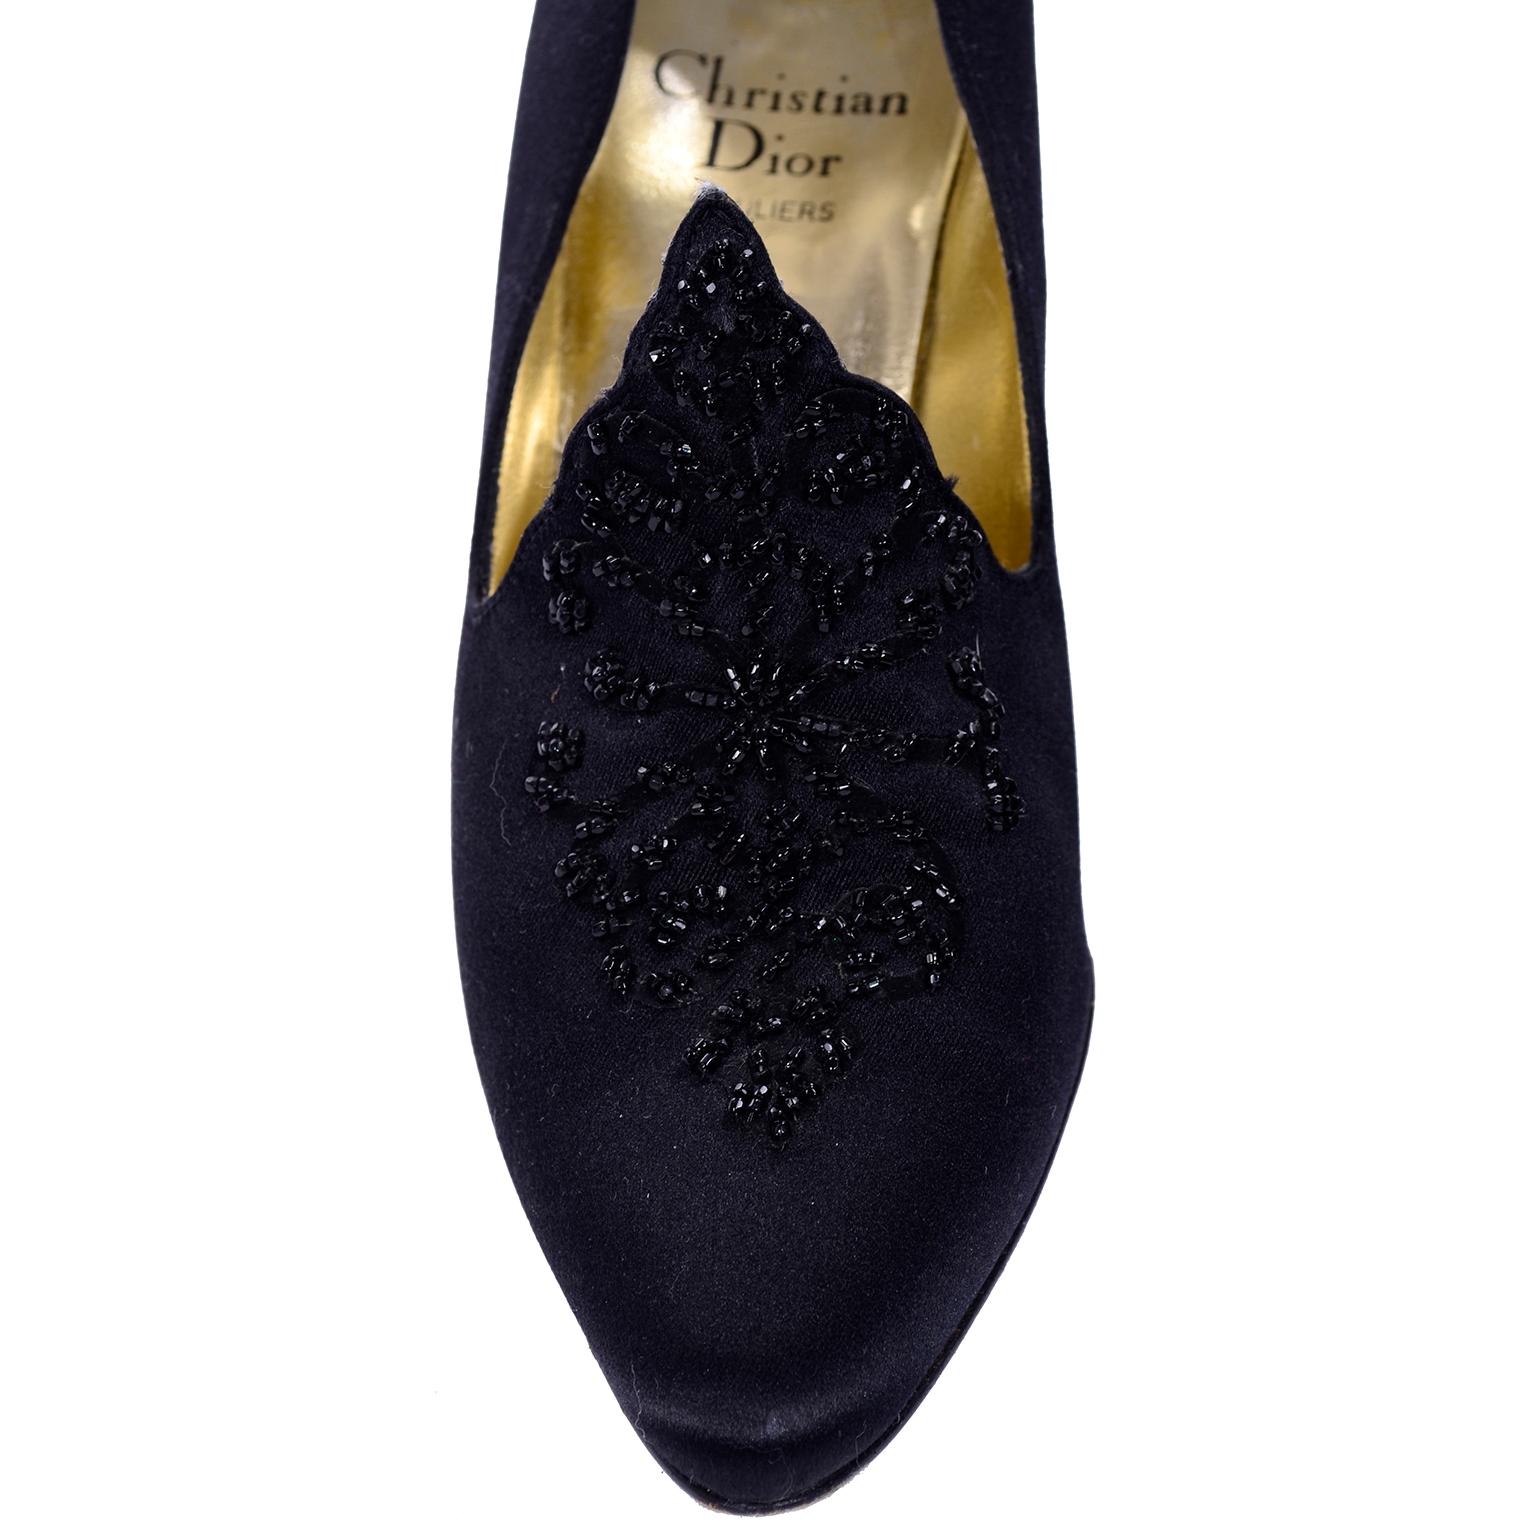 Christian Dior Souliers Vintage Black Satin Beaded Shoes Size 8 W/ Bag & Box 7